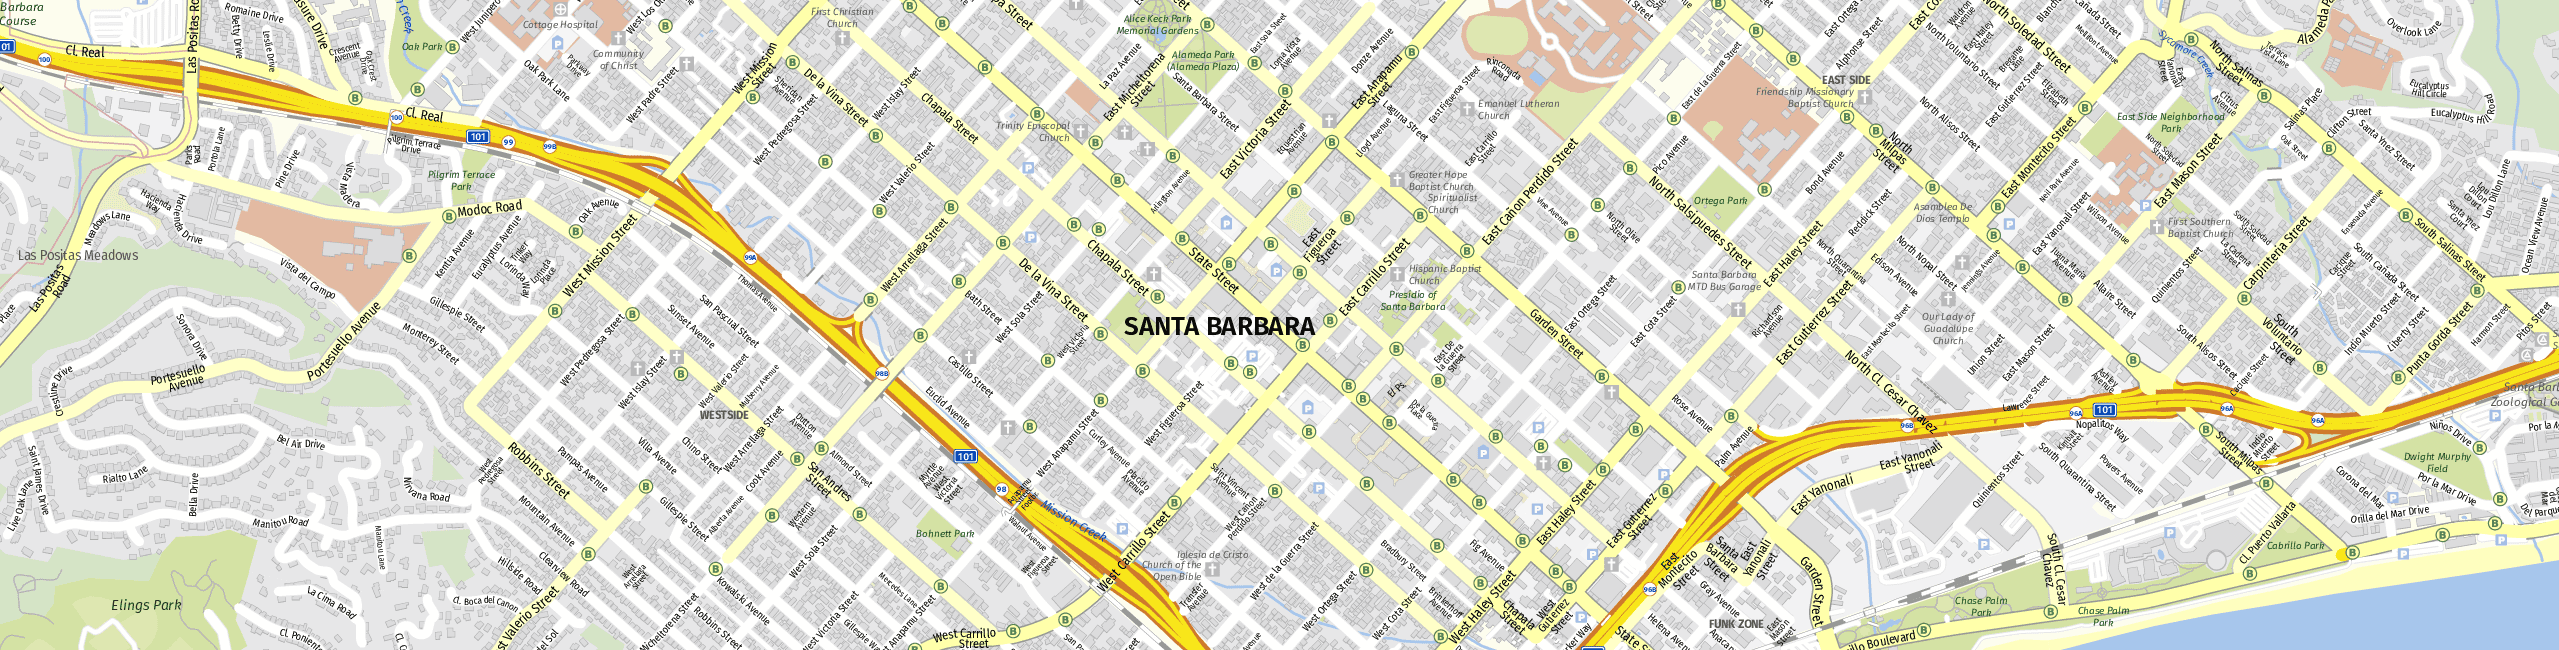 Stadtplan Santa Barbara zum Downloaden.